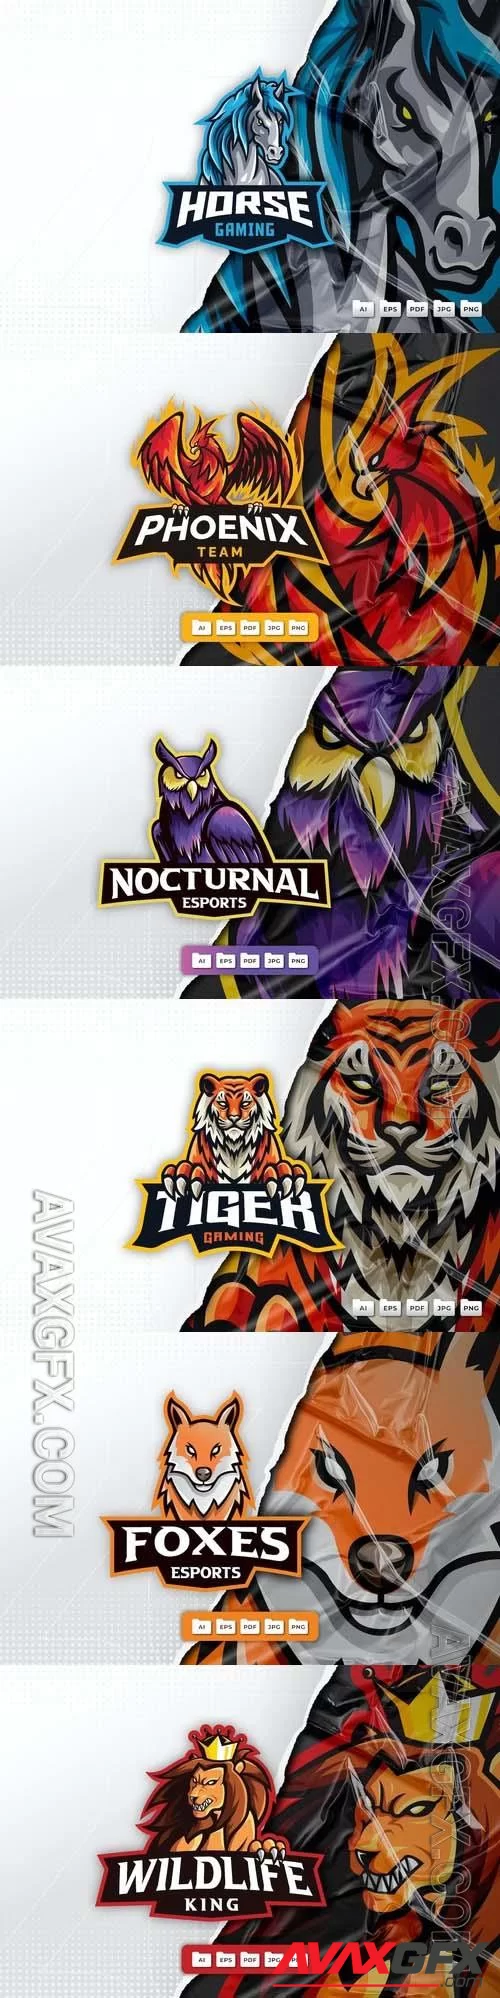 Tiger, phoenix, nocturnal bird, lion, horse, fox, mascot logo design